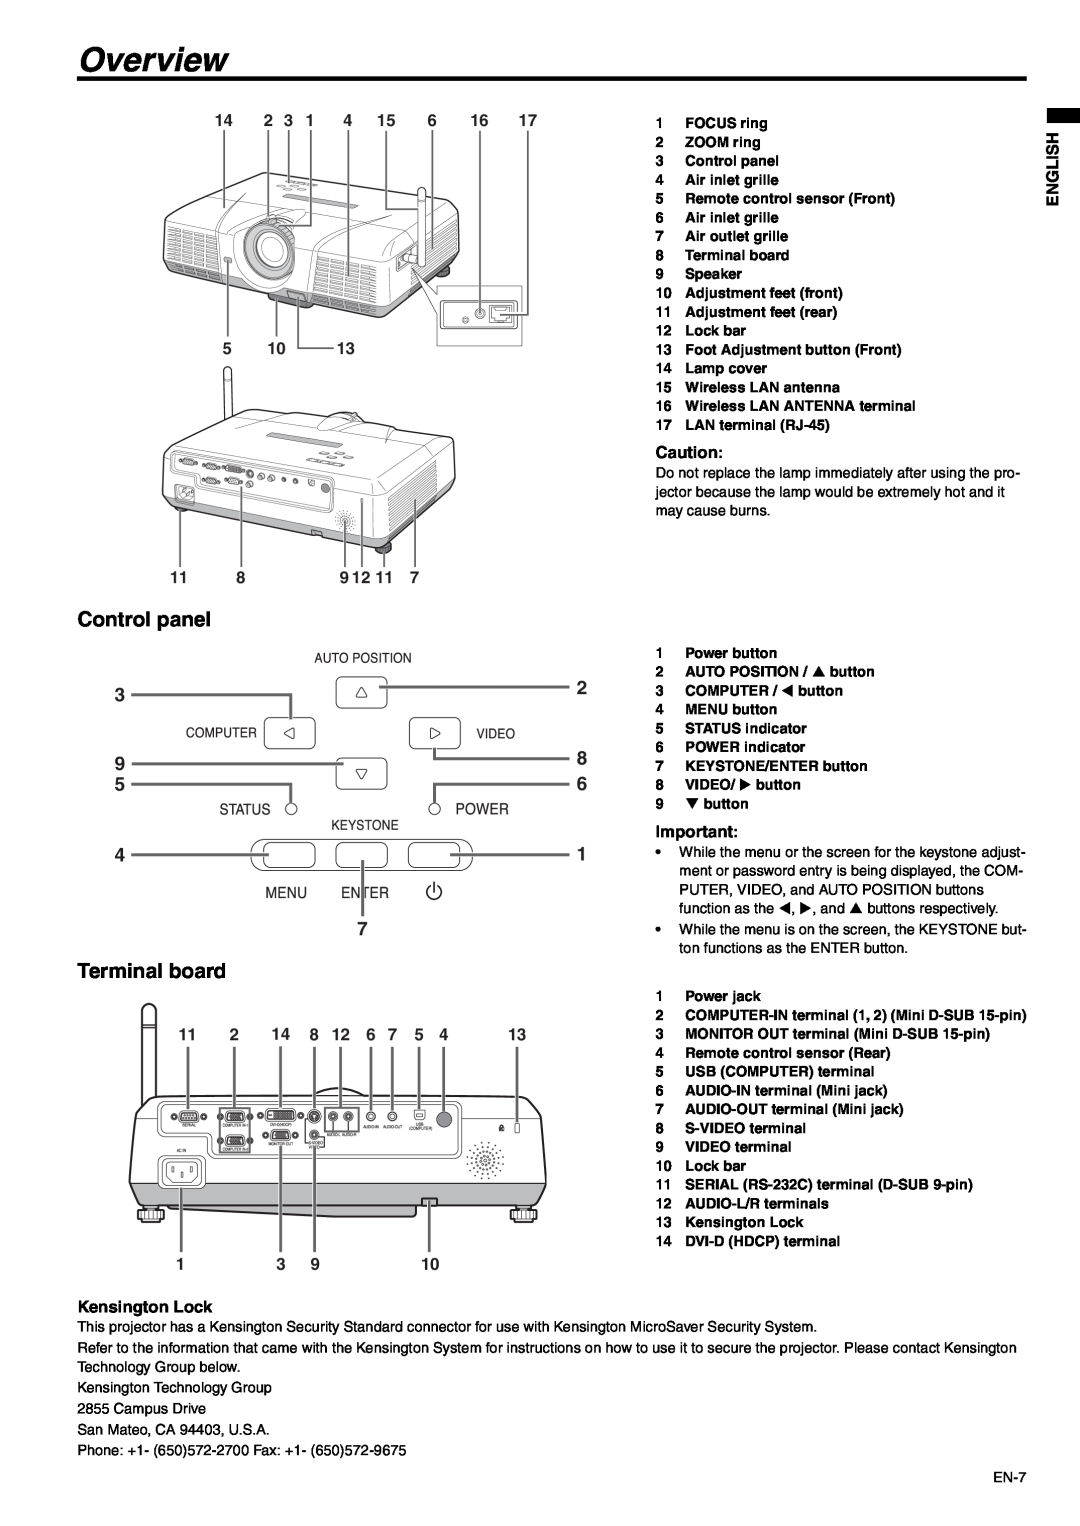 Mitsubishi Electronics XD530E, XD530U user manual Overview, Control panel, Terminal board, Kensington Lock, English 